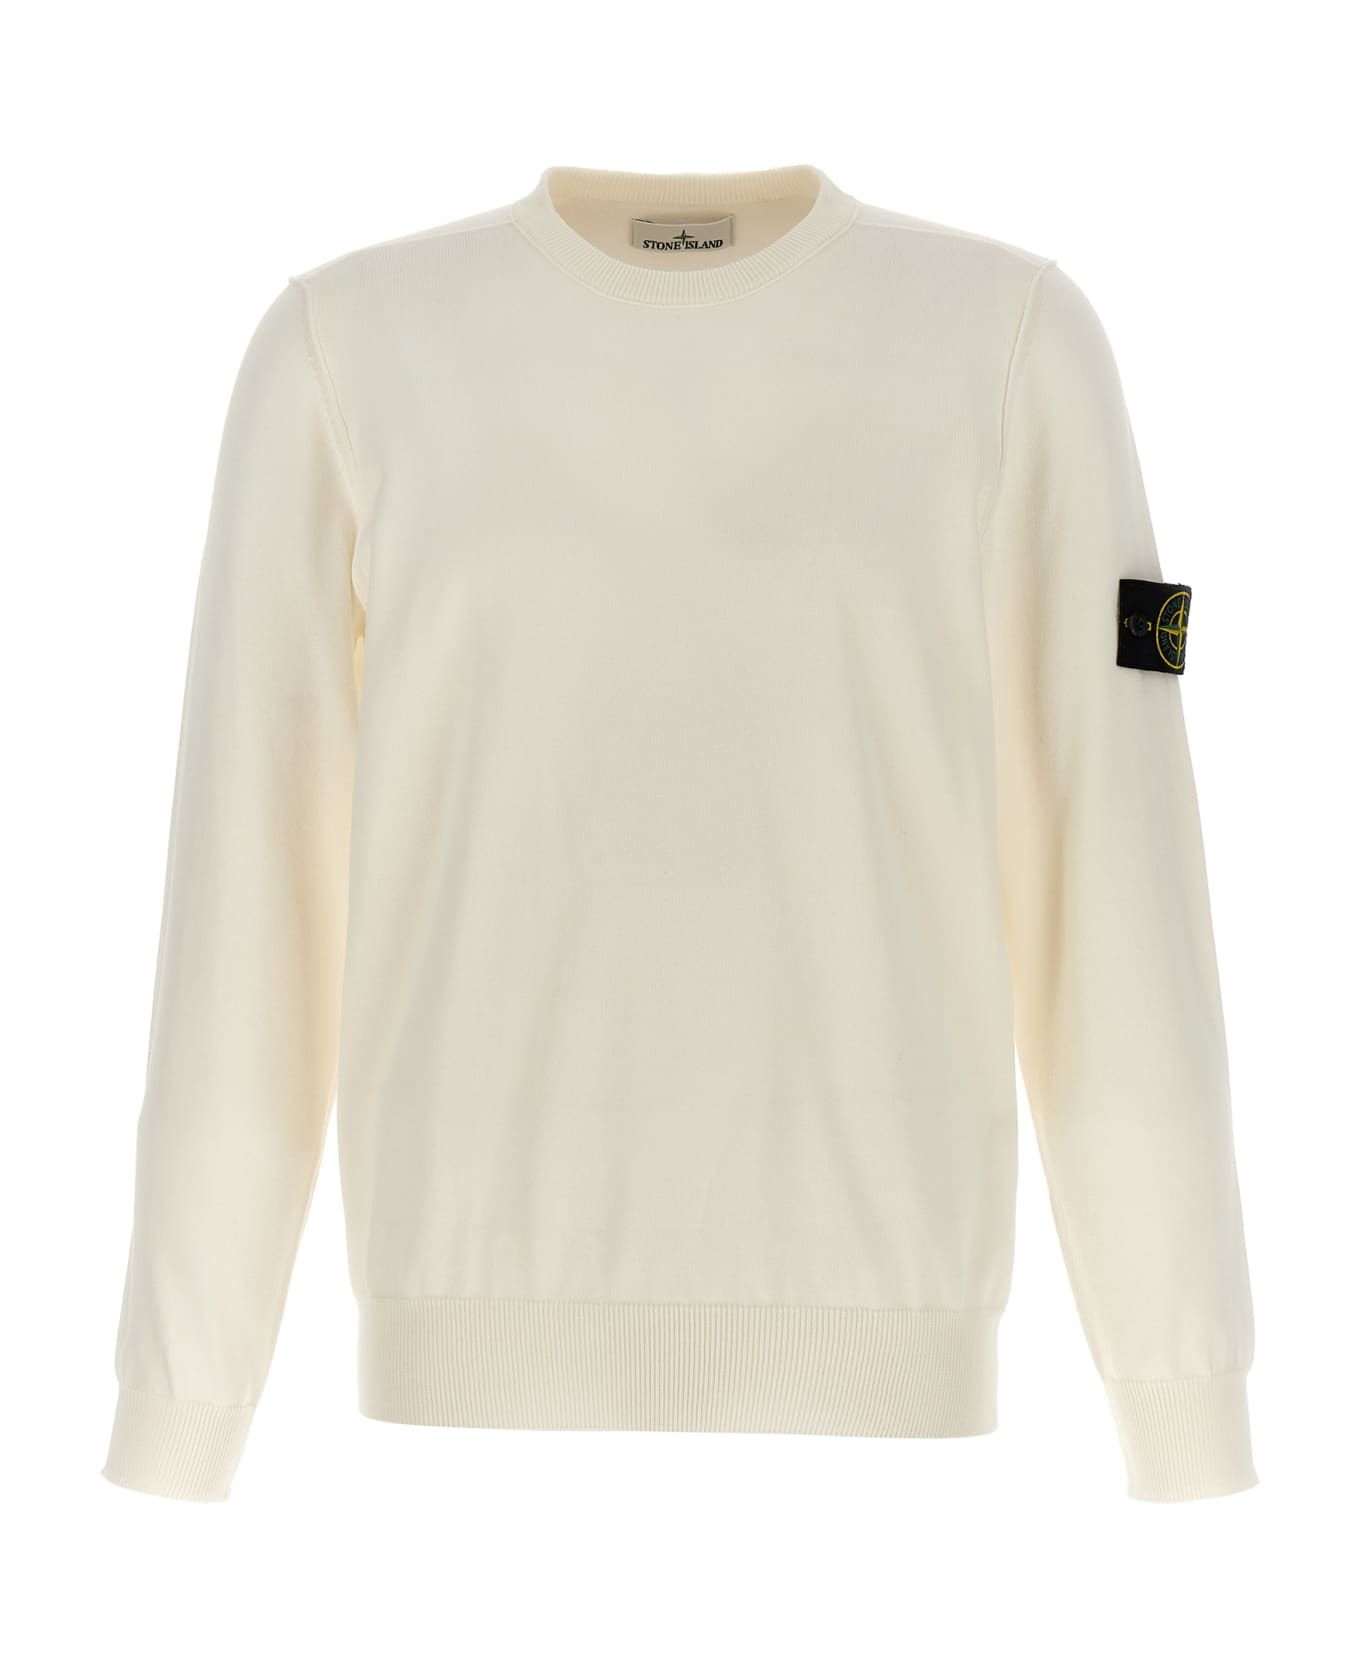 Stone Island Logo Sweater - White